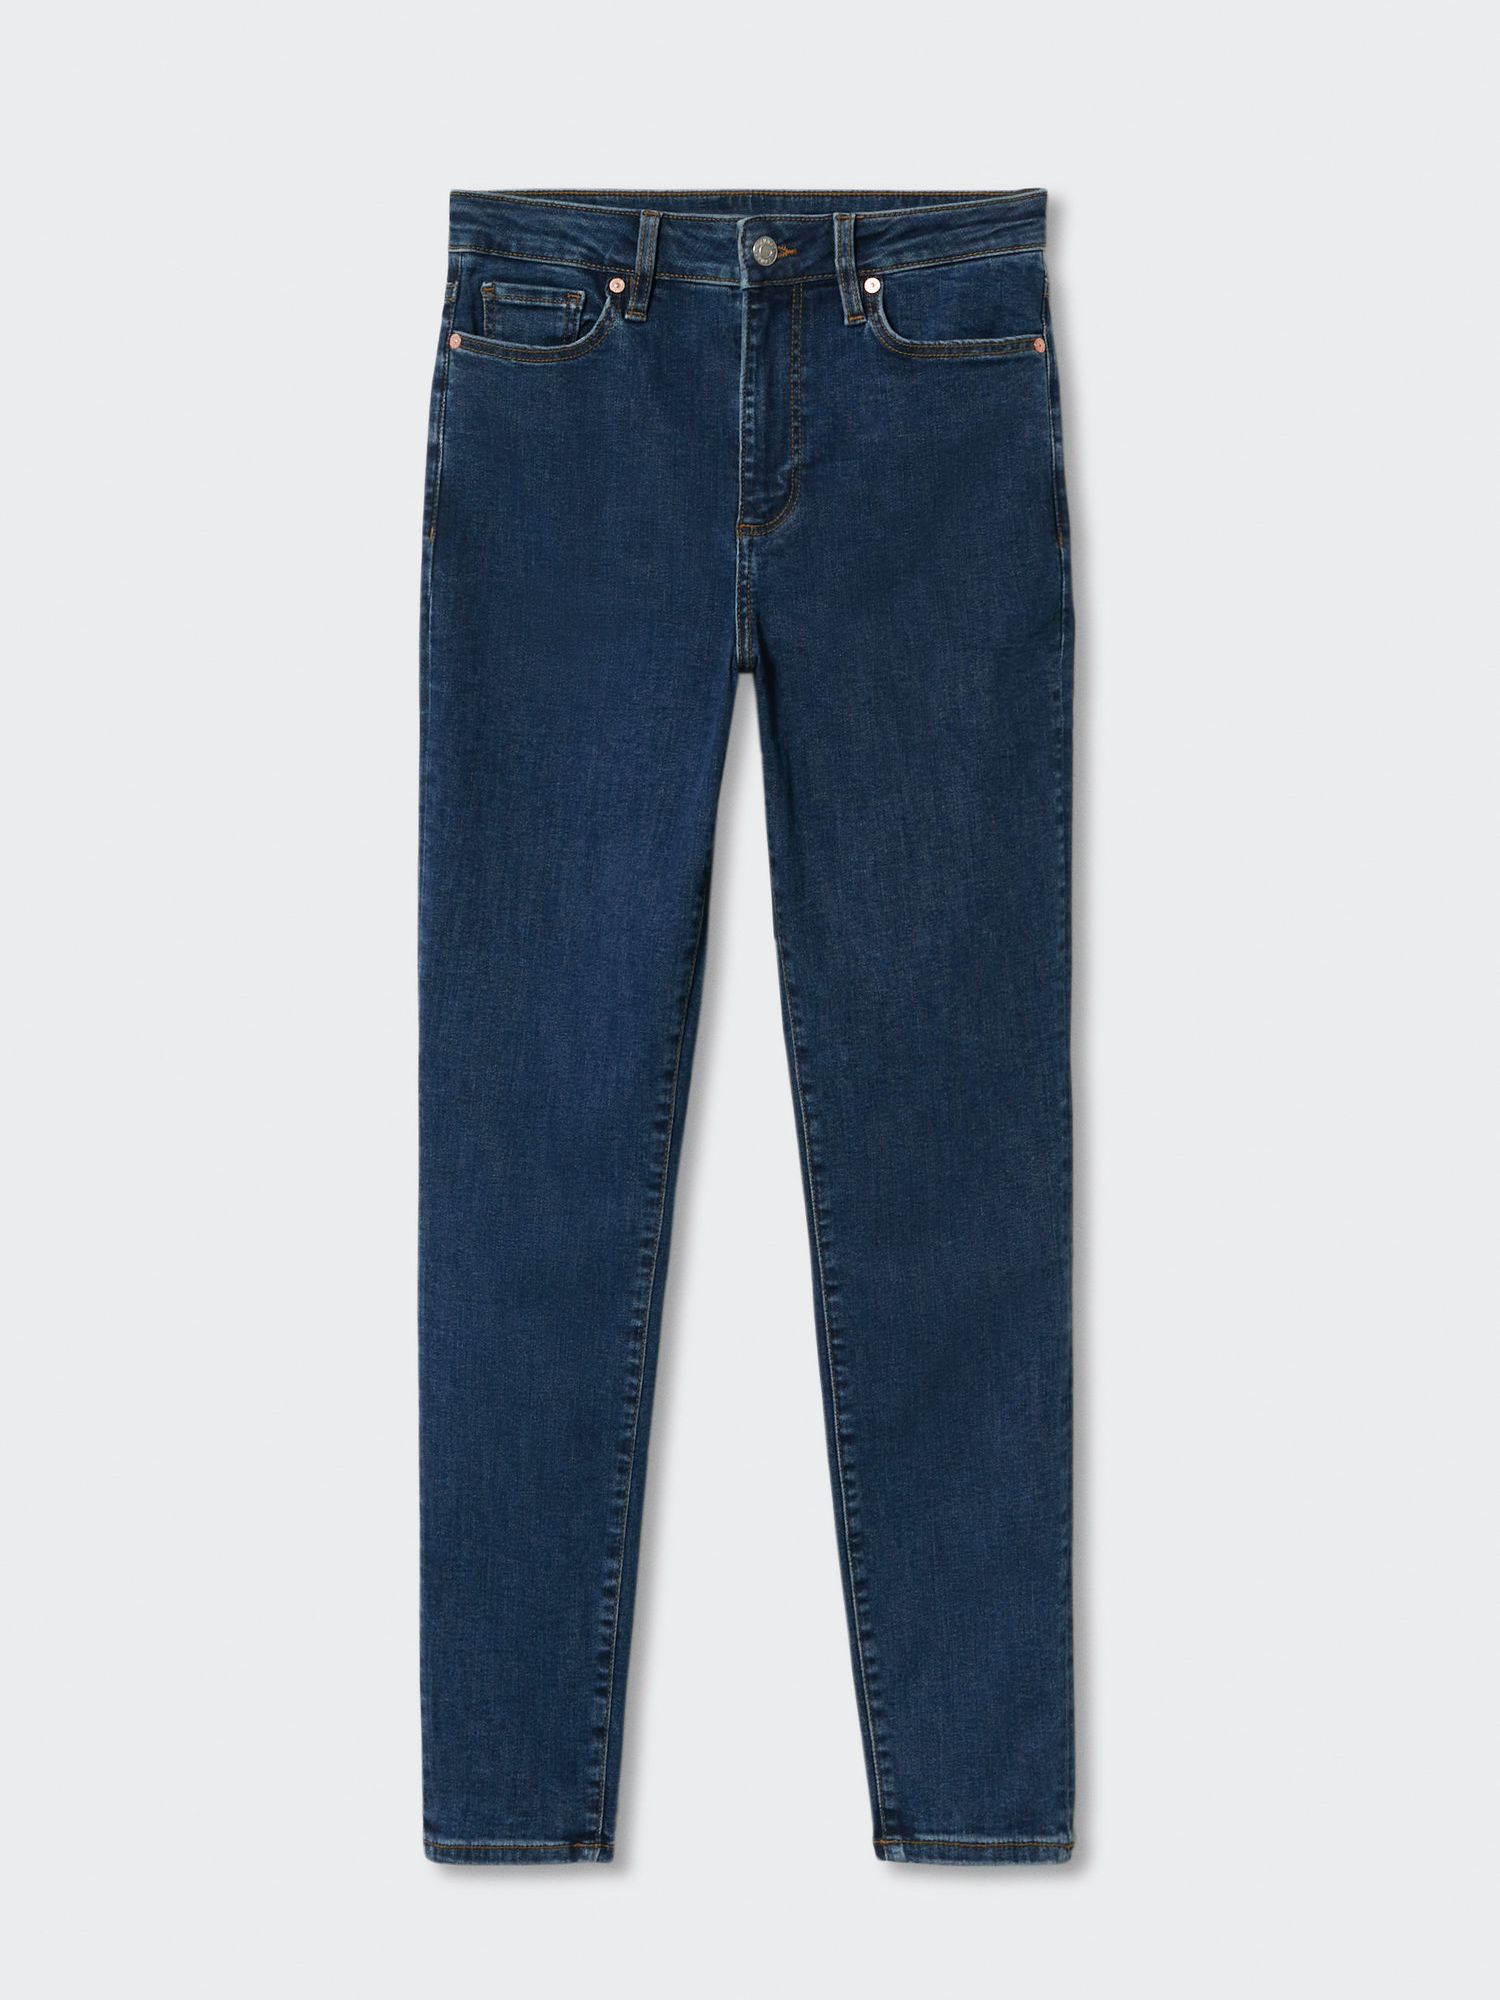 Mango Anne Skinny Jeans, Dark Blue at John Lewis & Partners